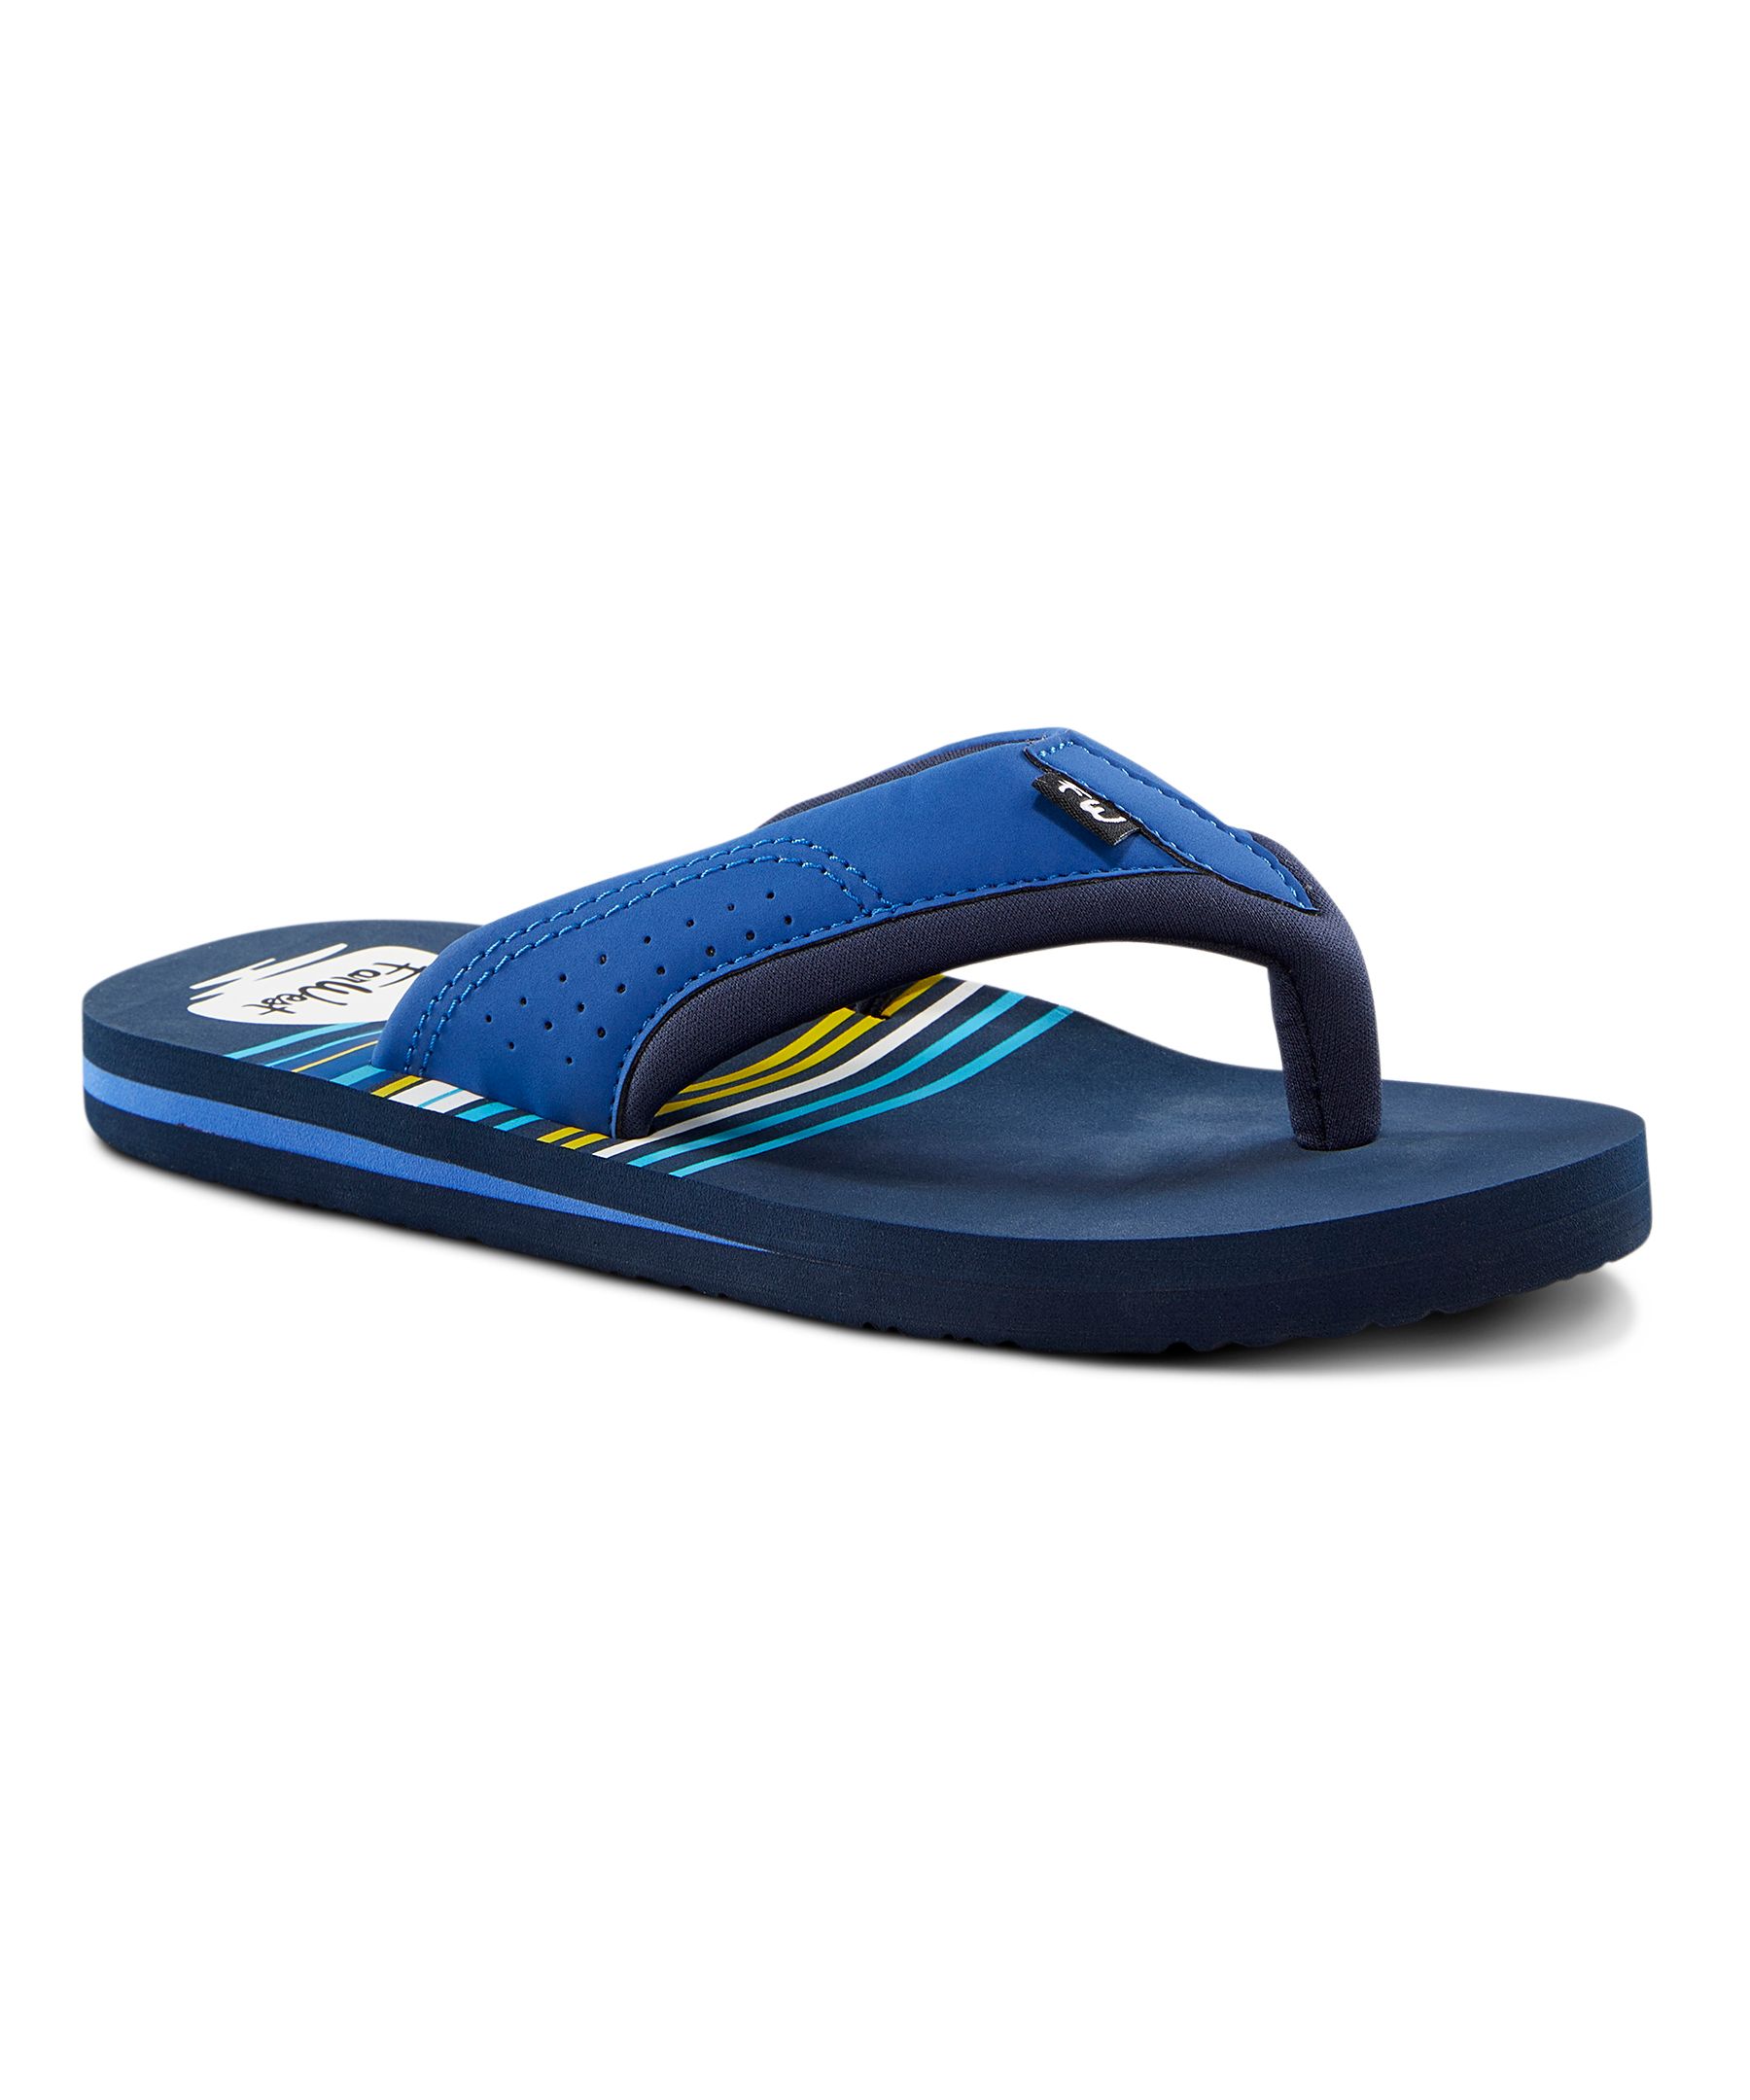 Youth Unisex Summerland Flip Flop Sandals - Navy/Blue | Marks